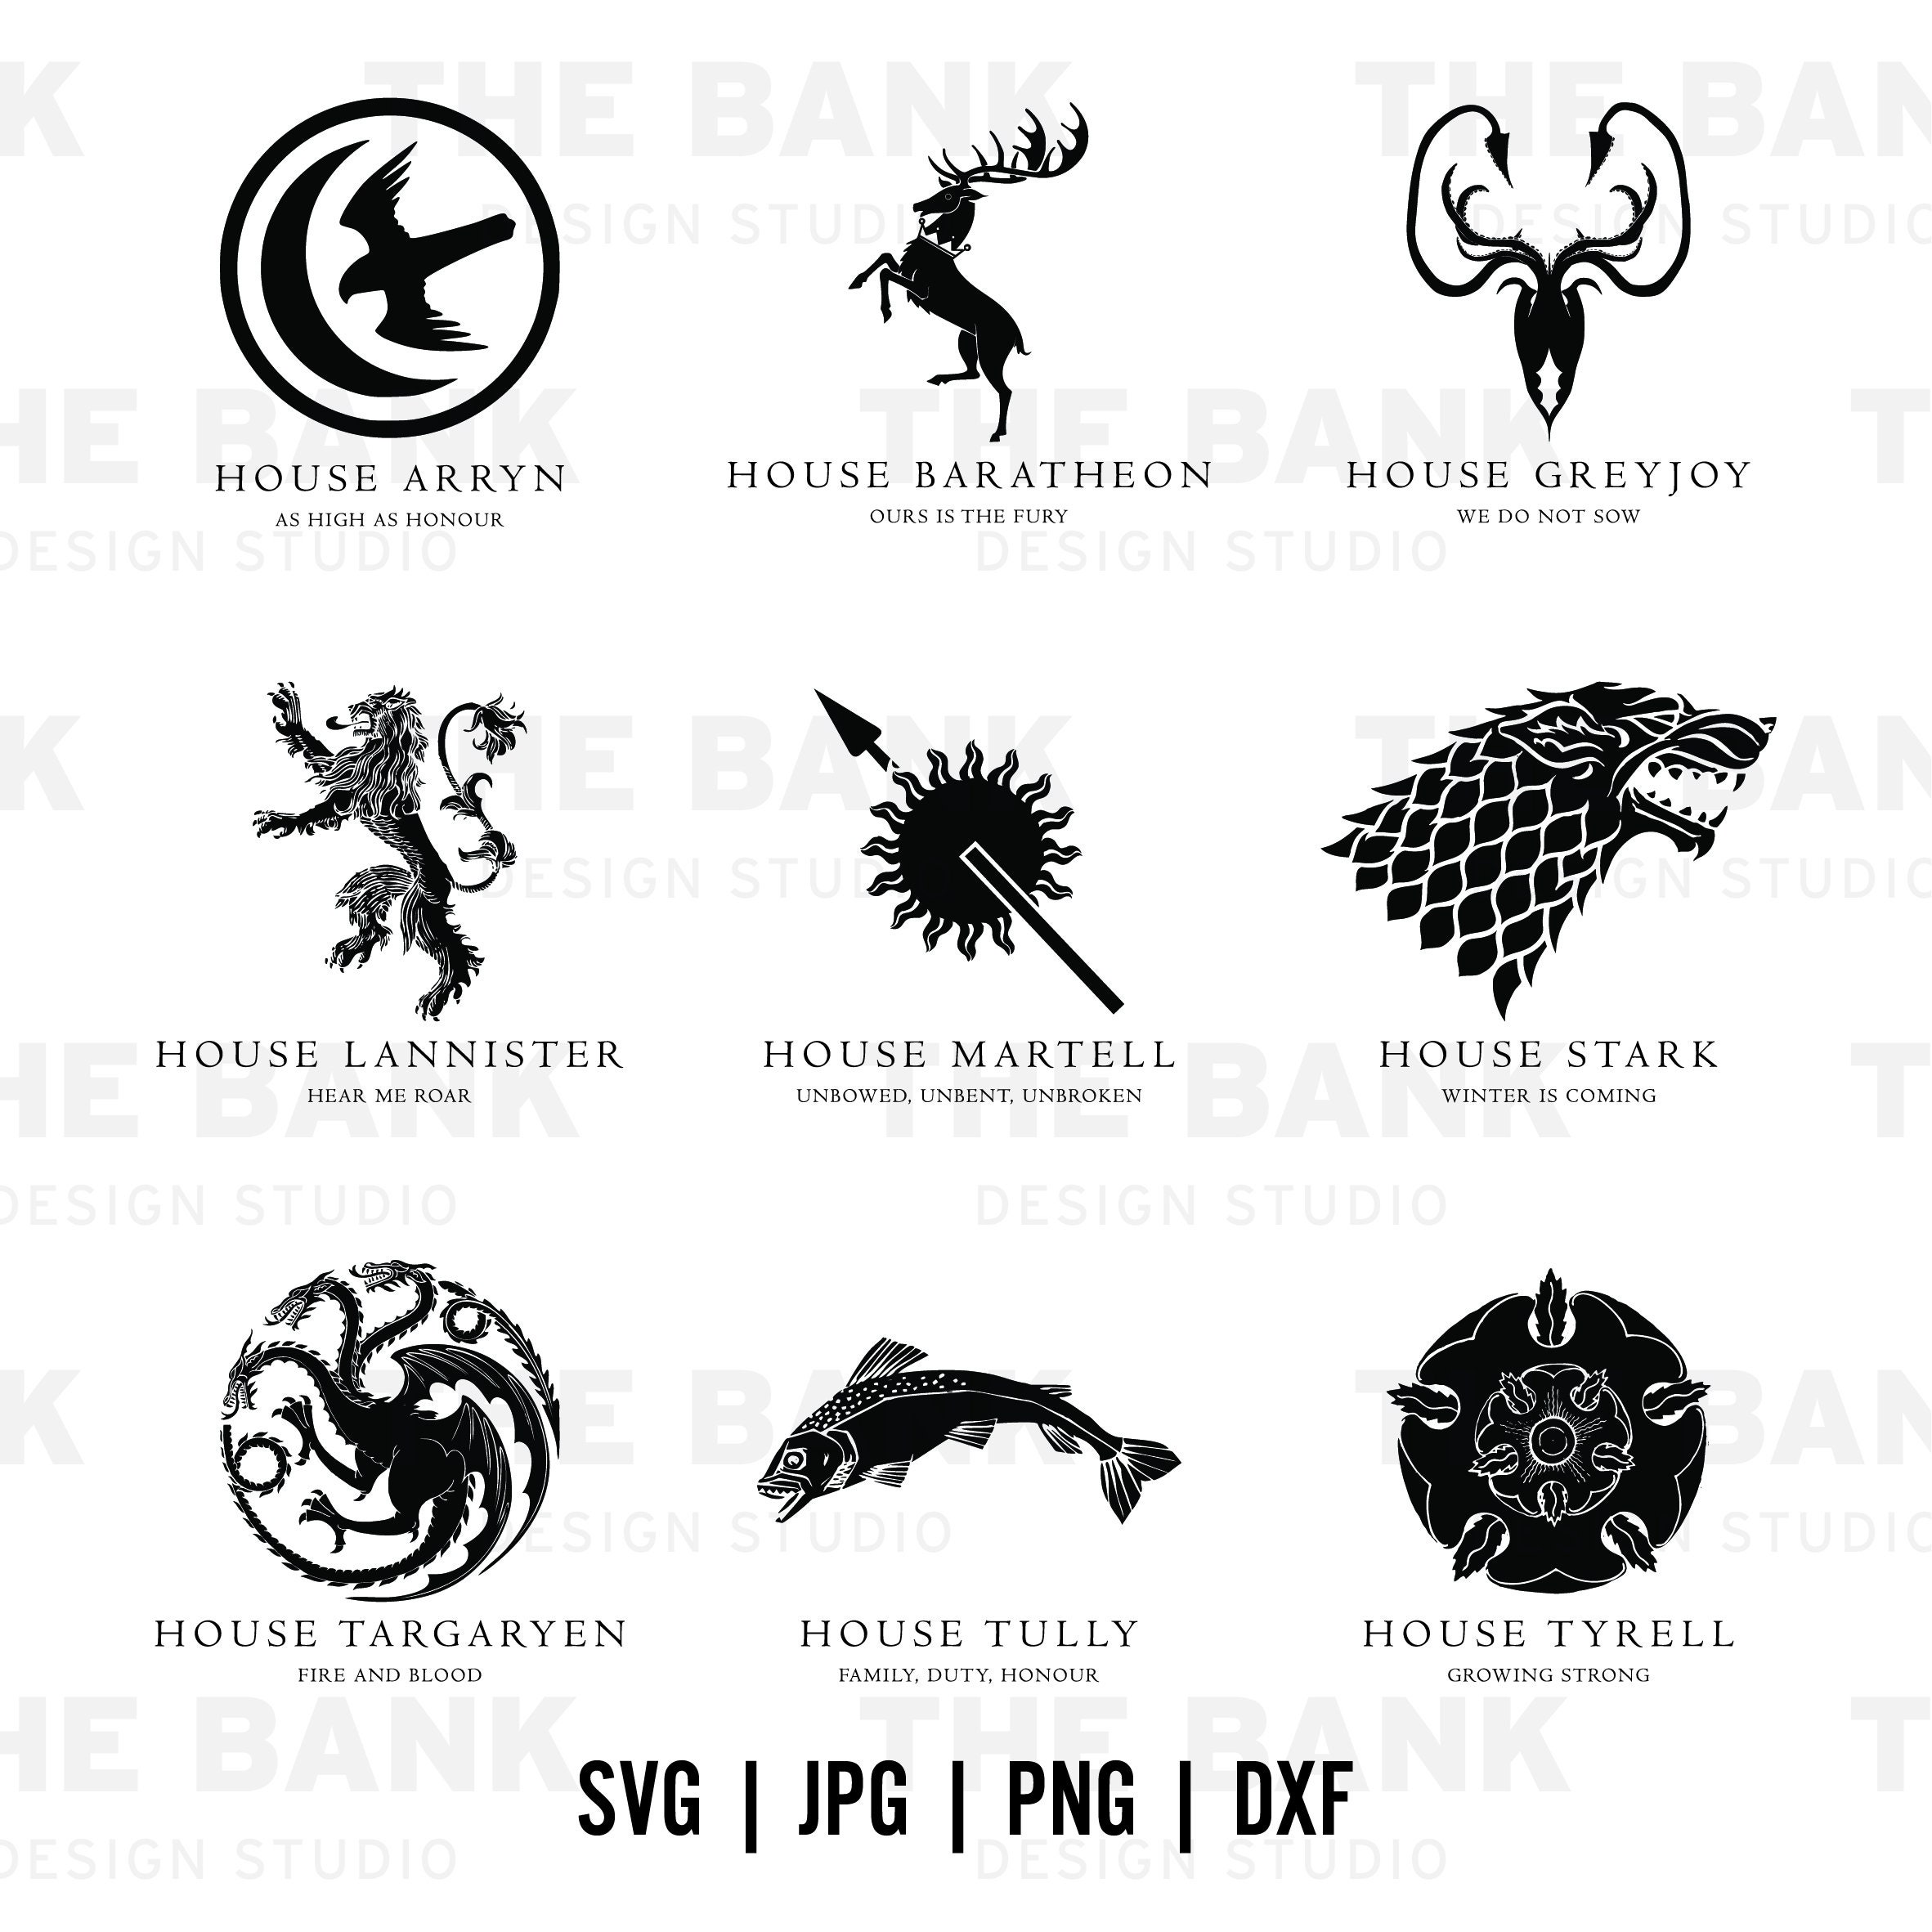 Game of Thrones Stark Logo Vector Graphic